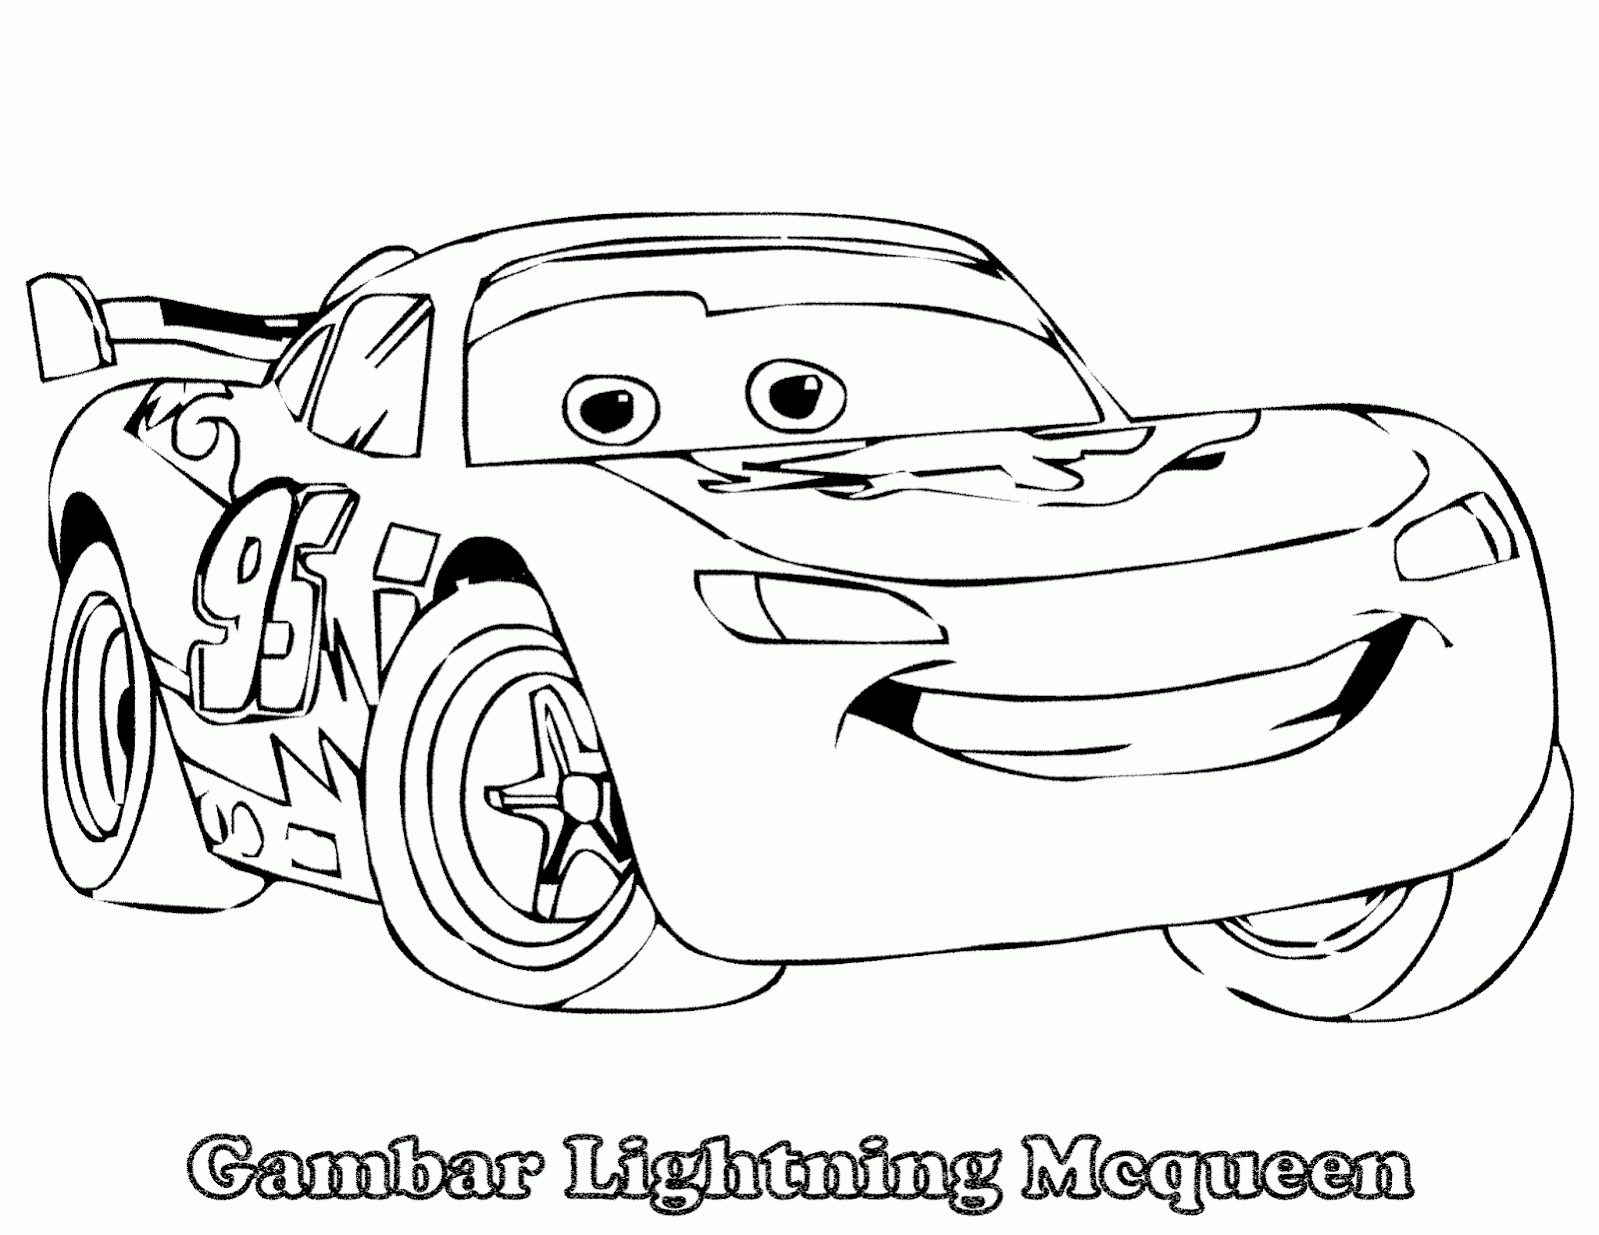 Mewarnai Gambar Lightning Mcqueen,Tokoh Film Cars - Contoh ...